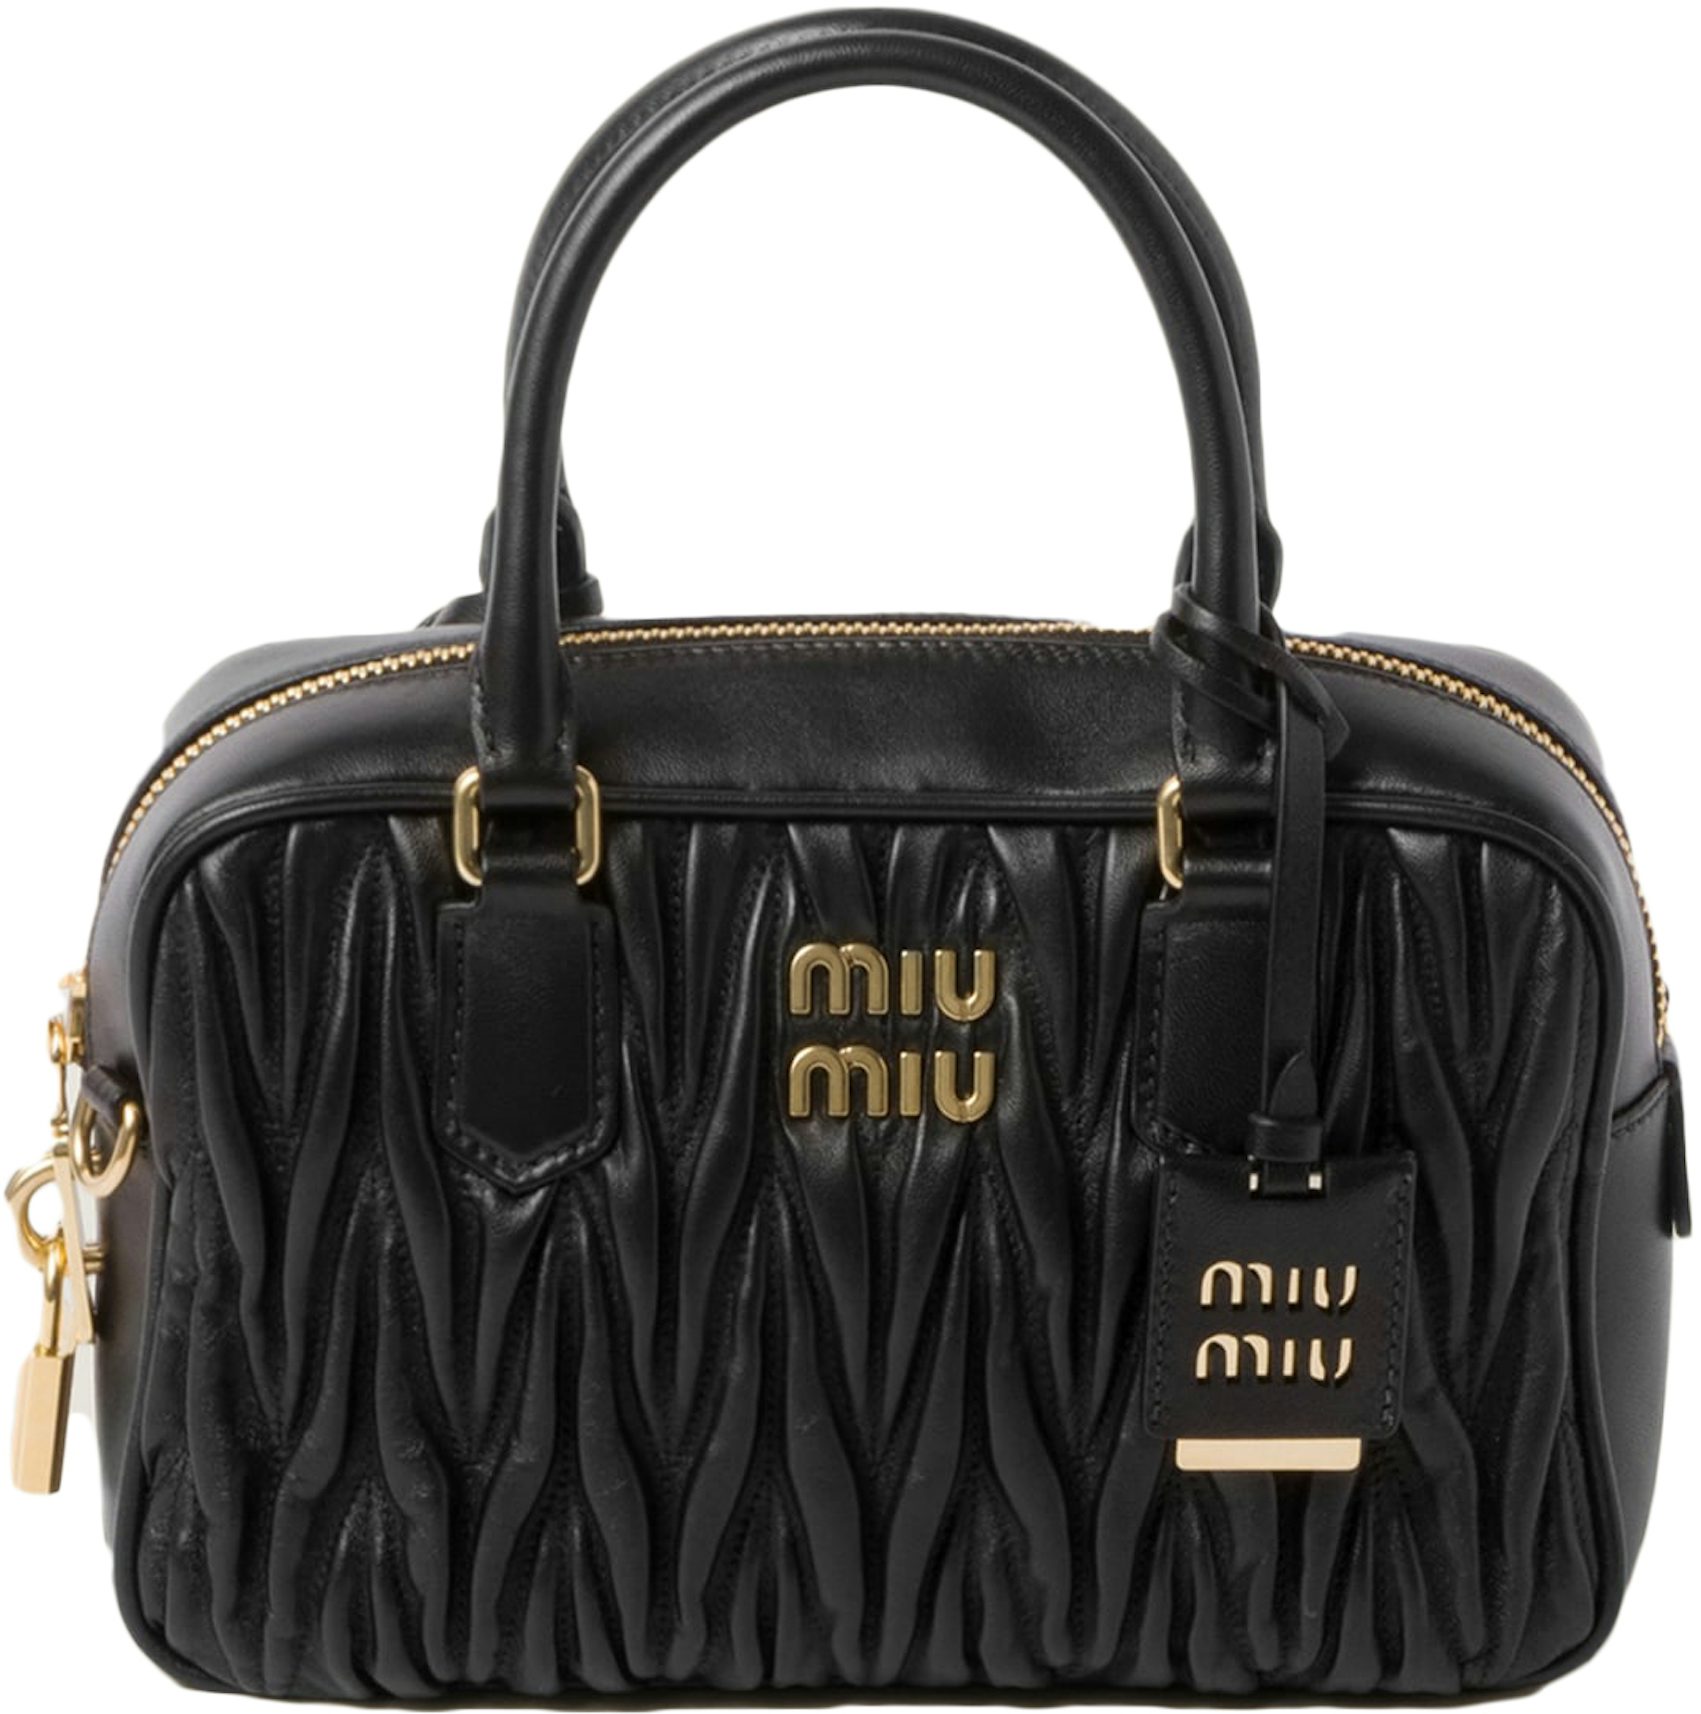 Authentic Miu Miu Matelasse Leather Handbag - Light grey/purple color